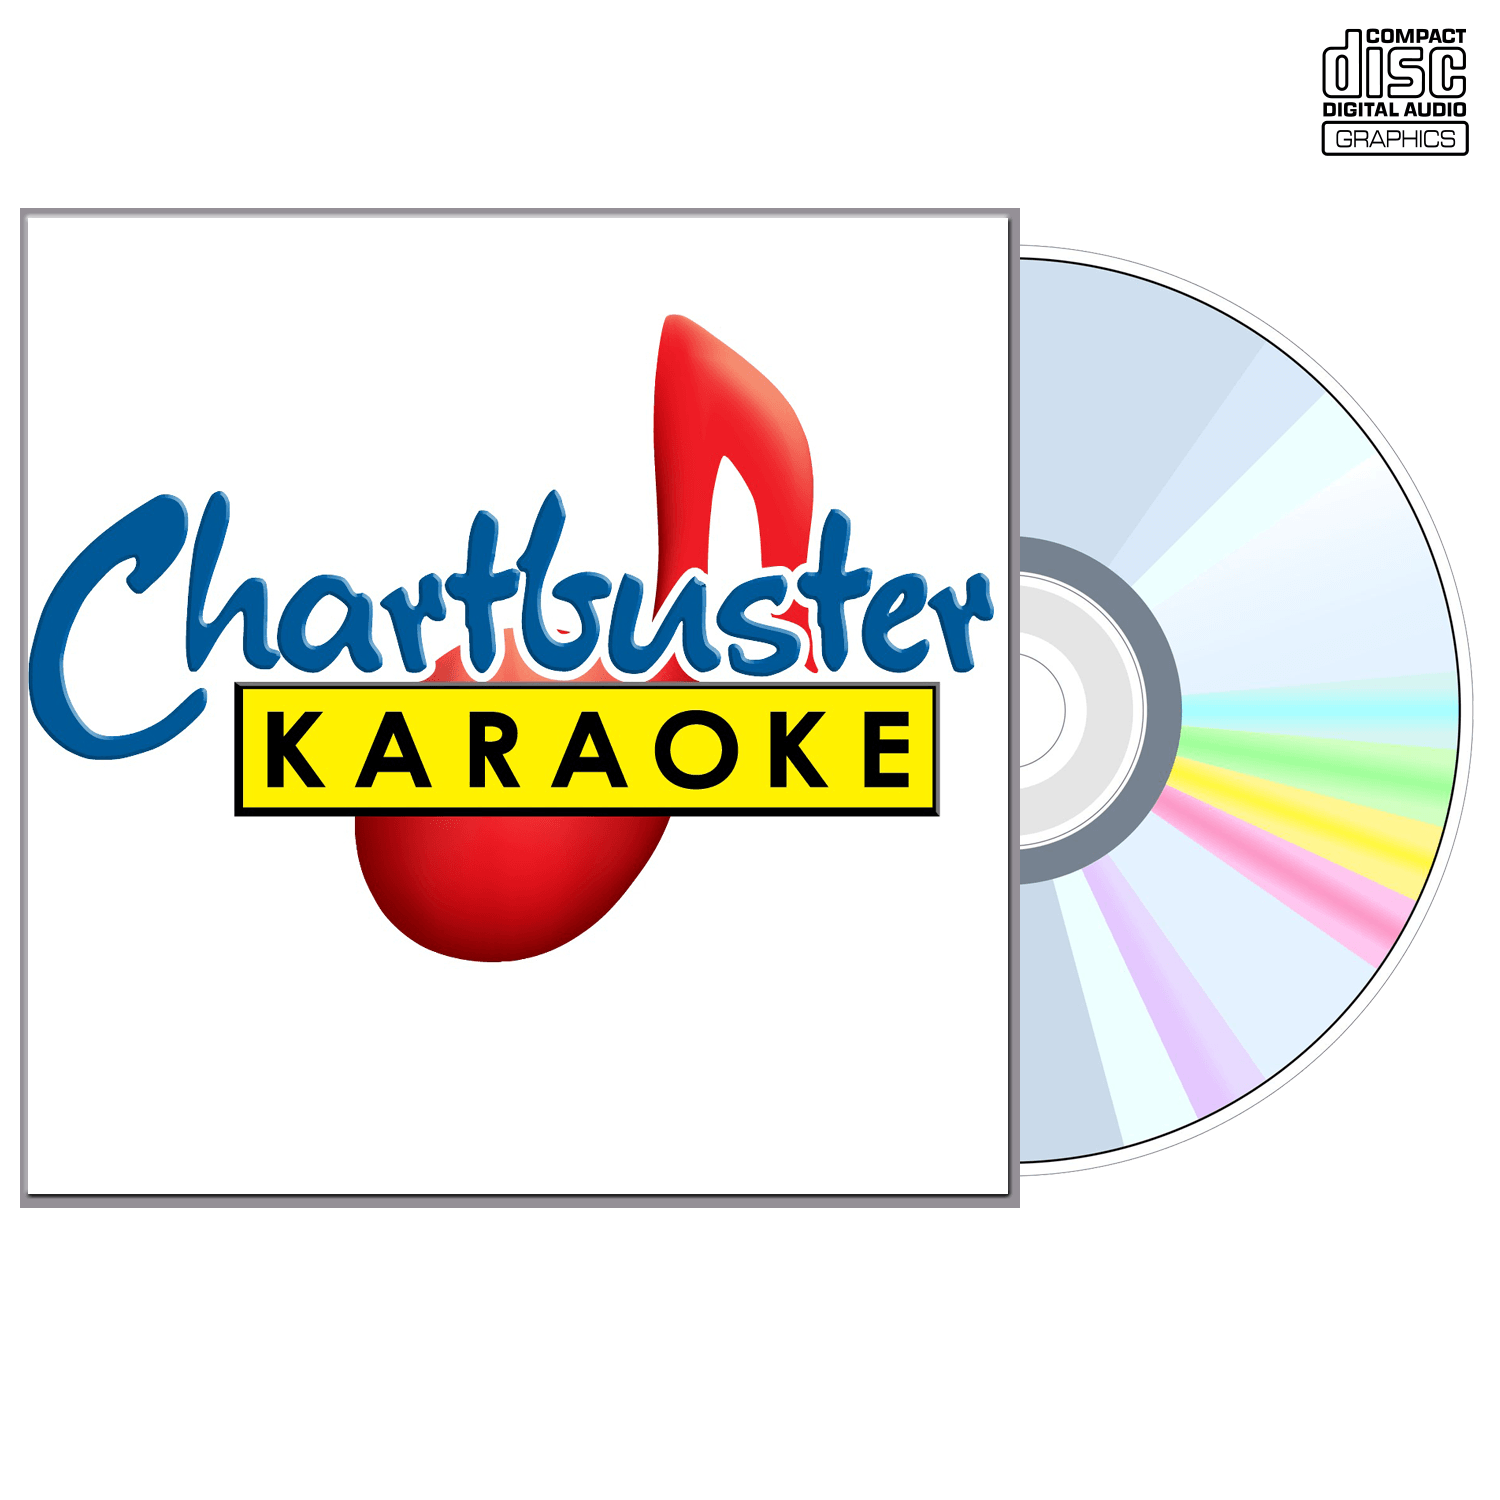 Warren Brothers - CD+G - Chartbuster Karaoke - Karaoke Home Entertainment